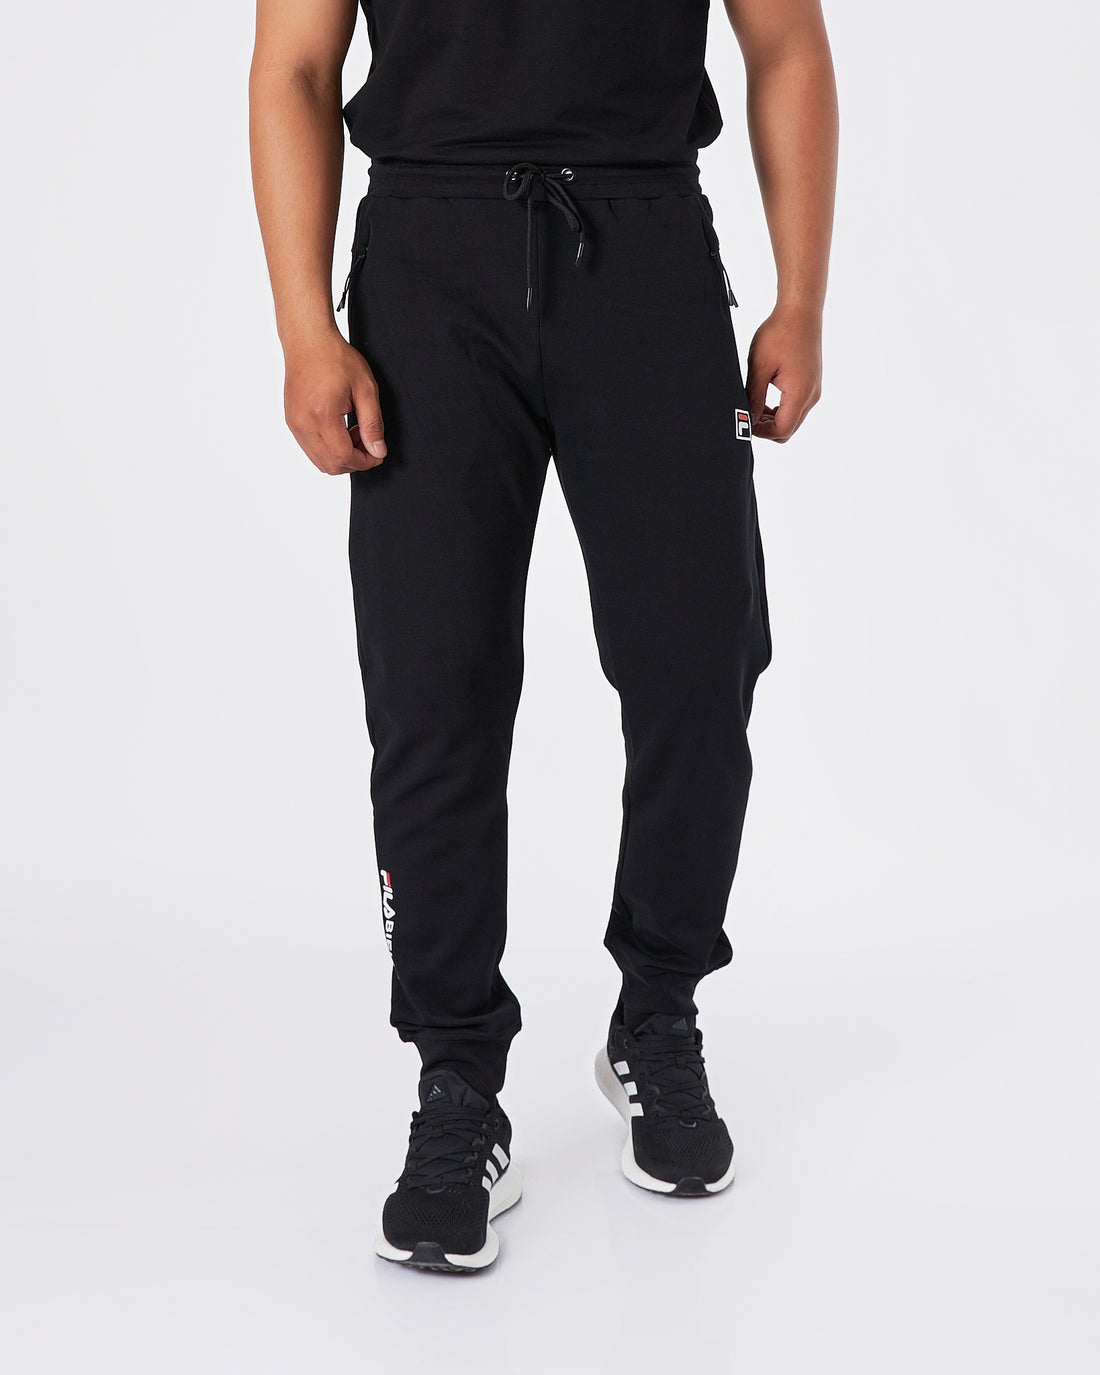 Gap Khaki Regular Fit Men Pants 23.90 - MOI OUTFIT